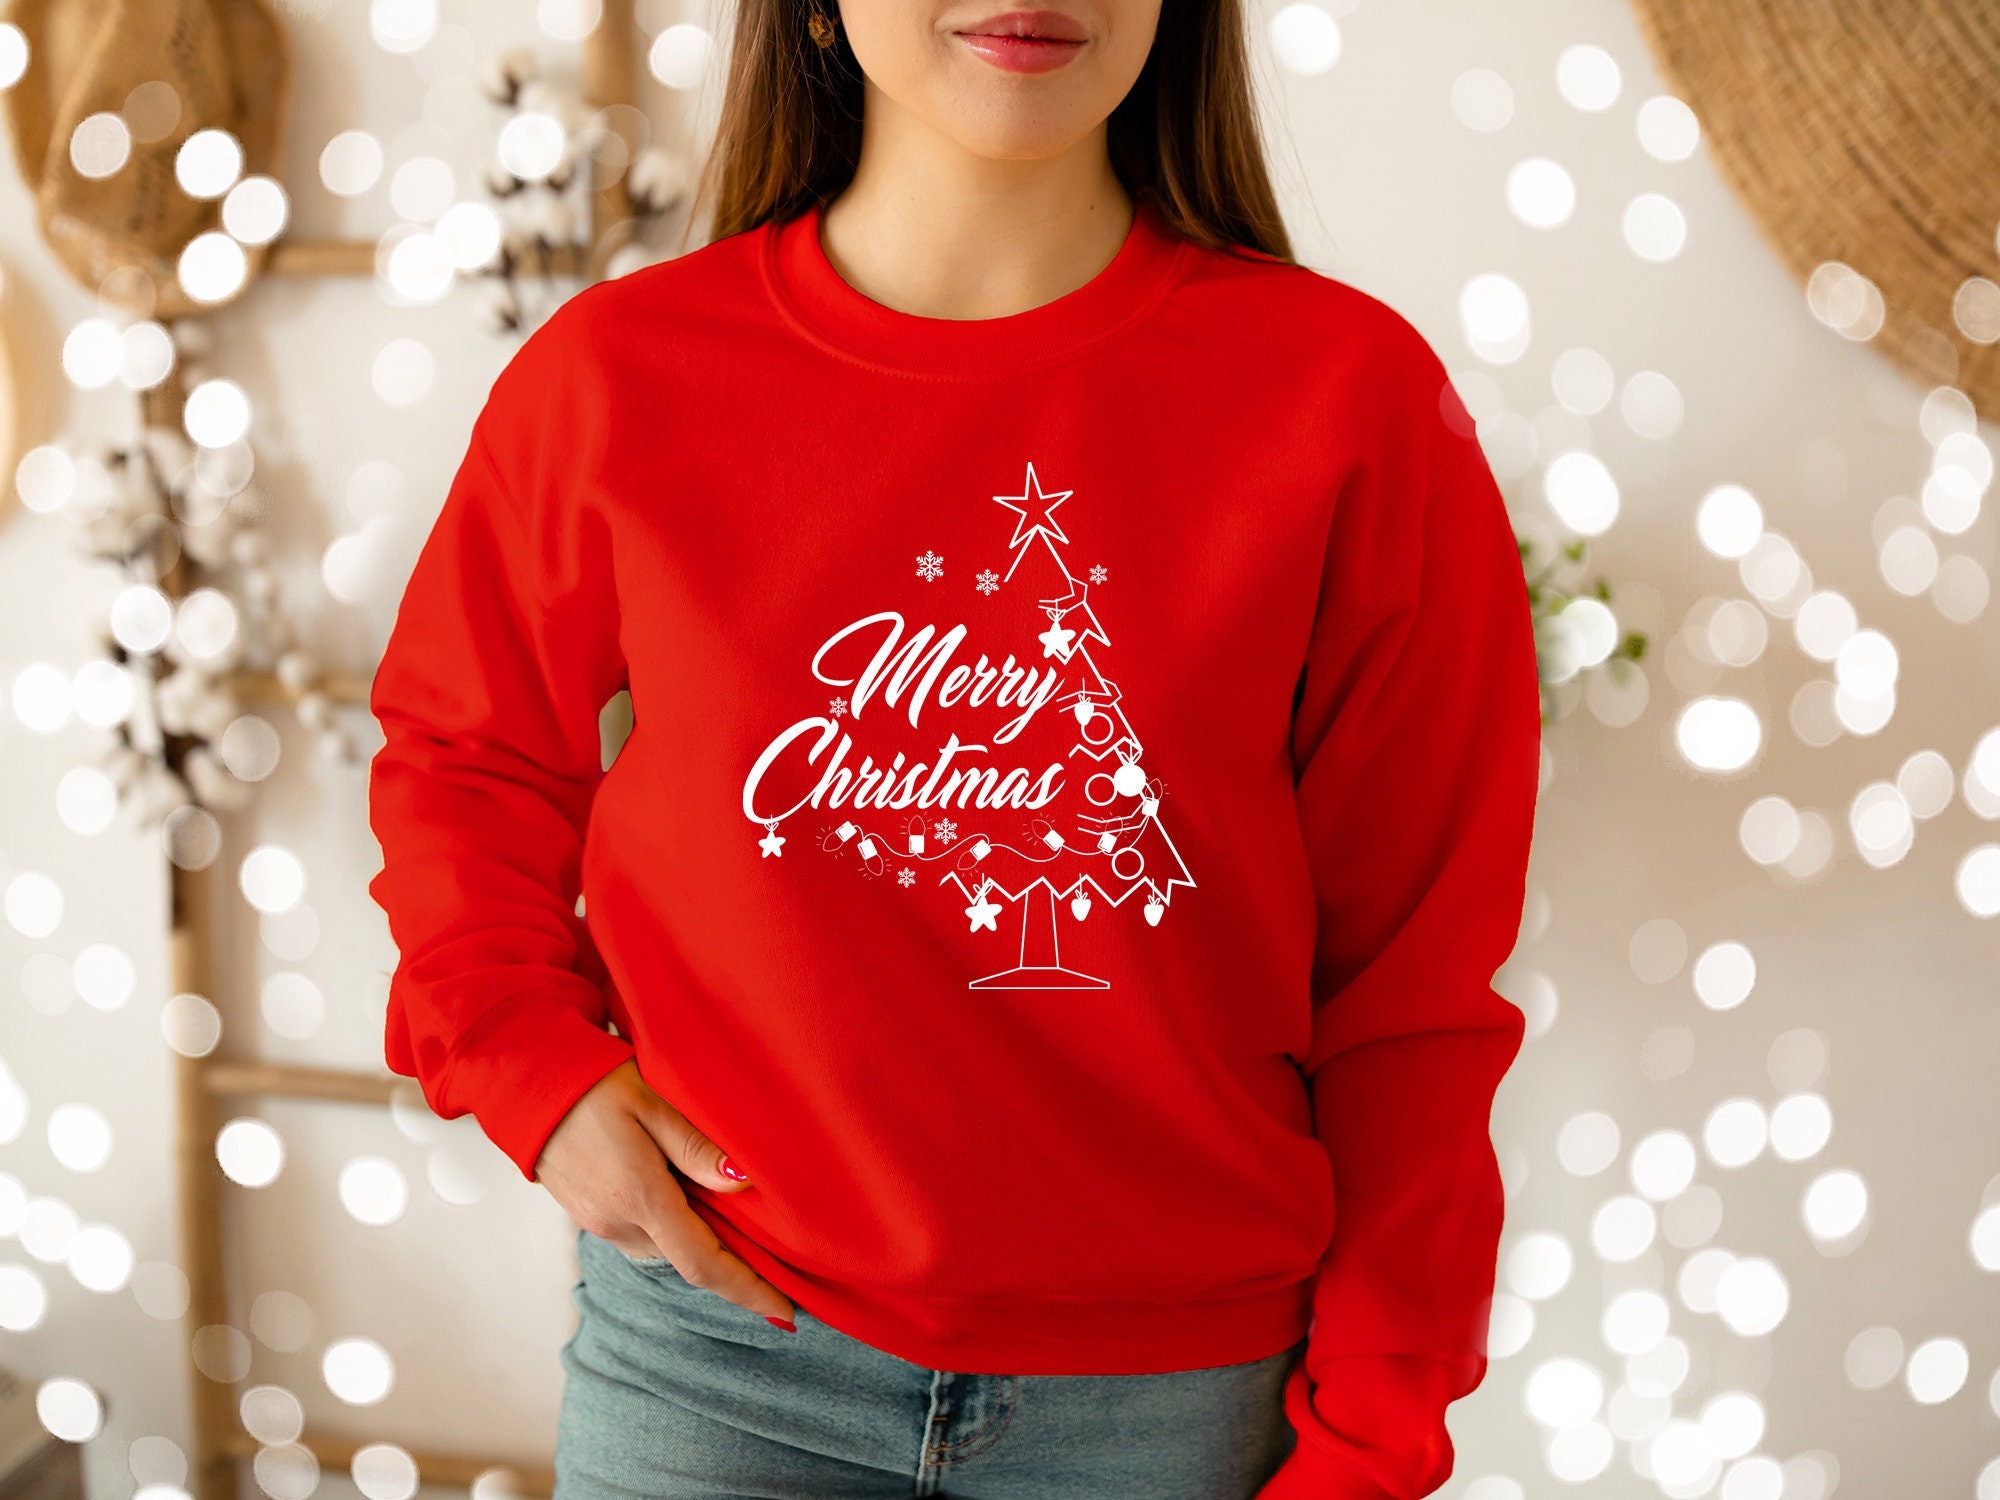 Merry Christmas Sweatshirt For Women Merry Christ-mas